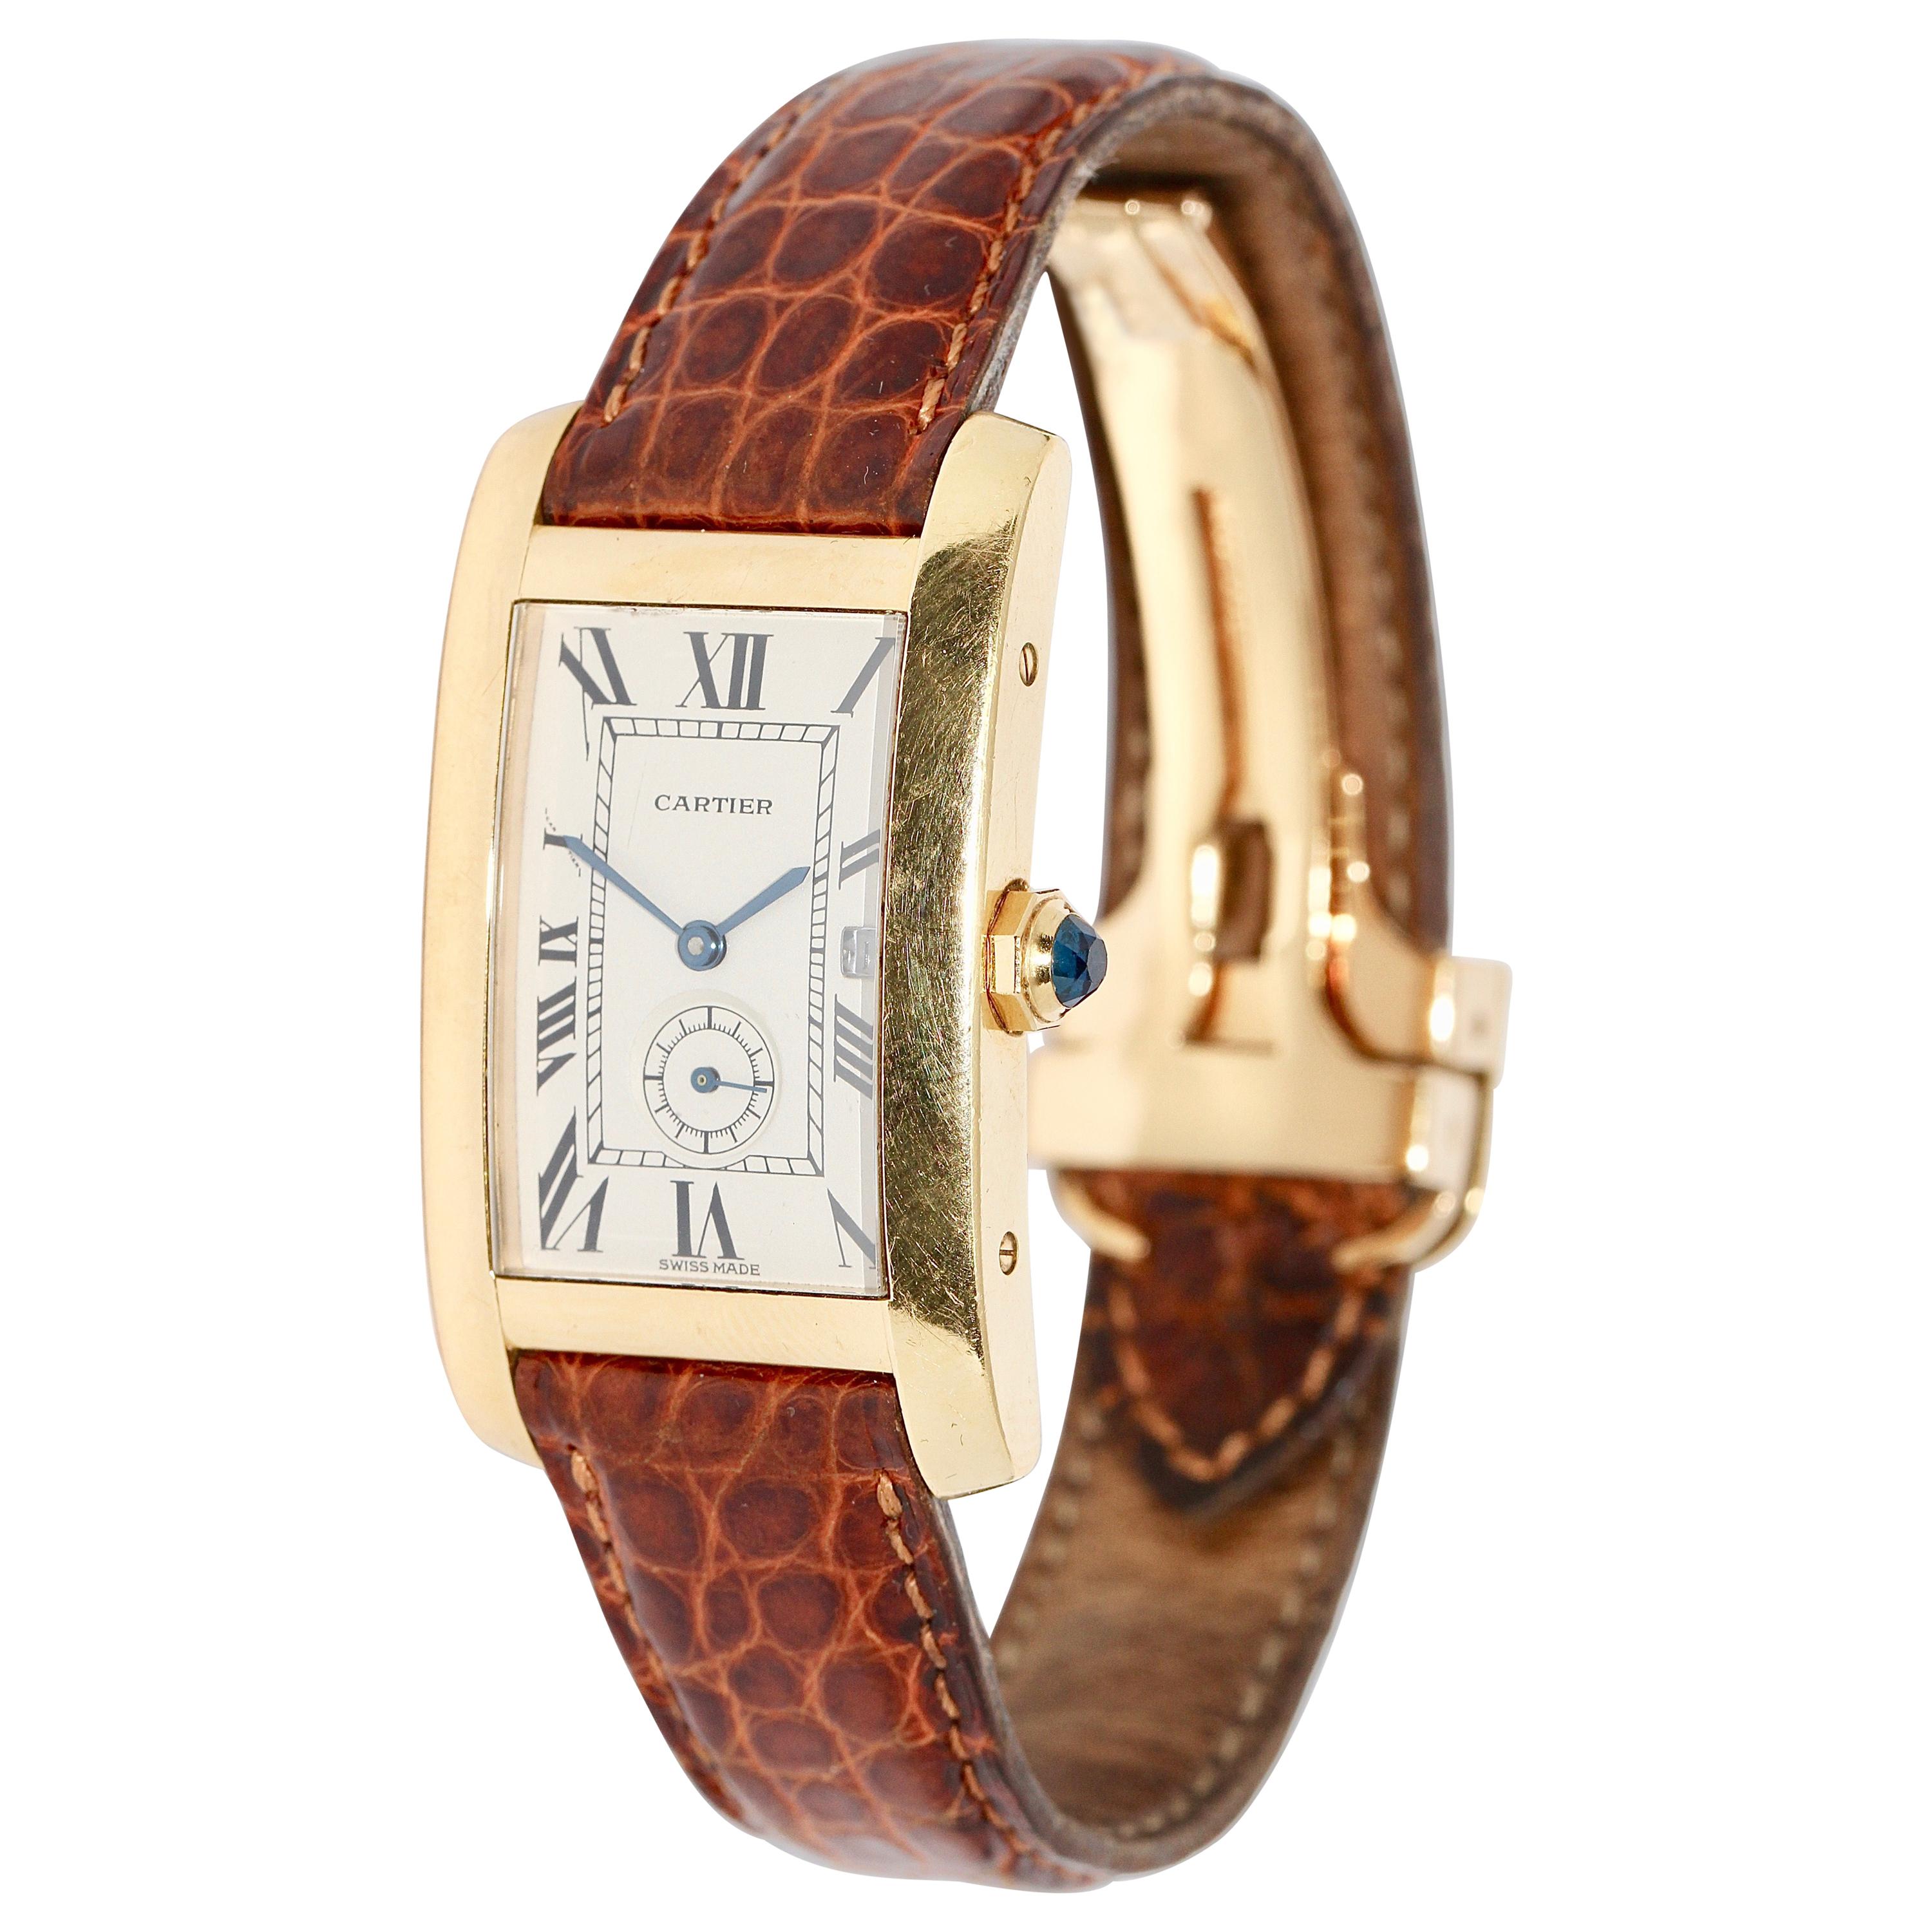 Cartier Tank Americaine 18 Karat Gold Ladies Watch with Original Certificate